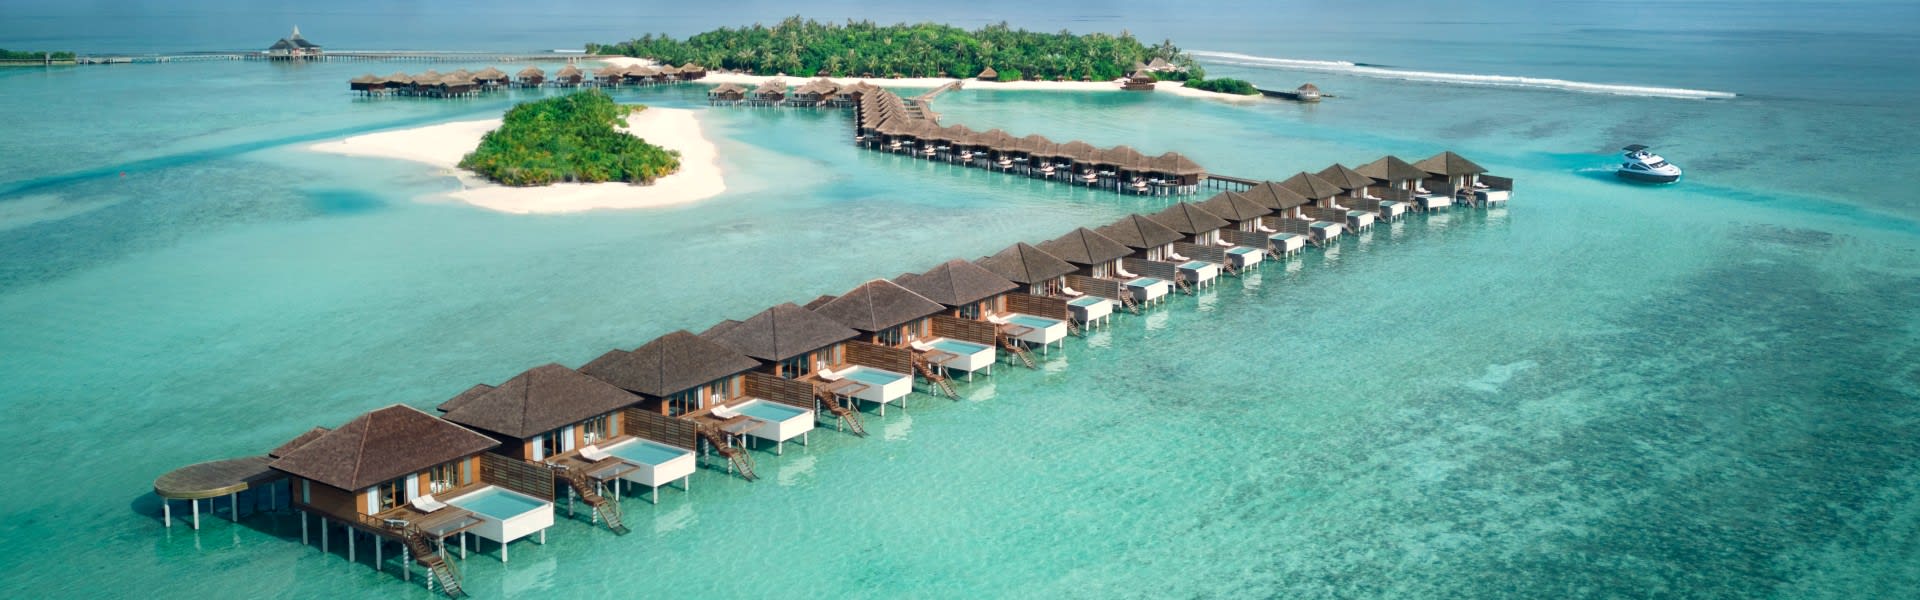 Island aerial view of Anantara Veli Maldives Resort